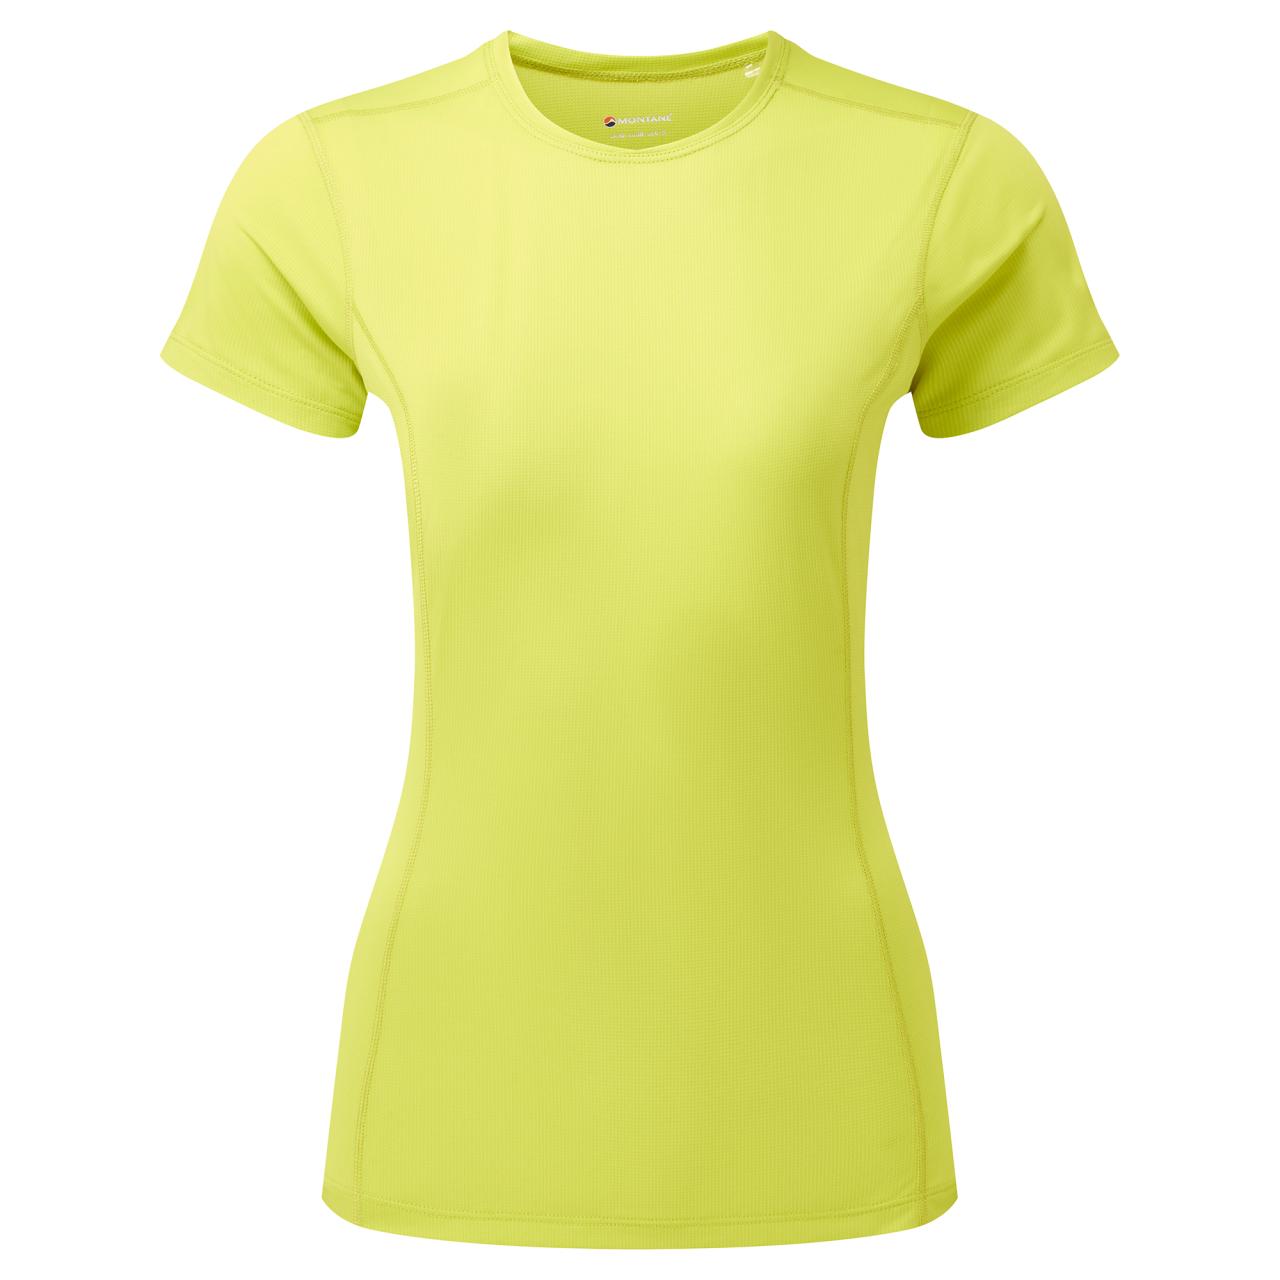 FEM DART LITE T-SHIRT-CITRUS SPRING-UK14/L dámské triko žlutozelené